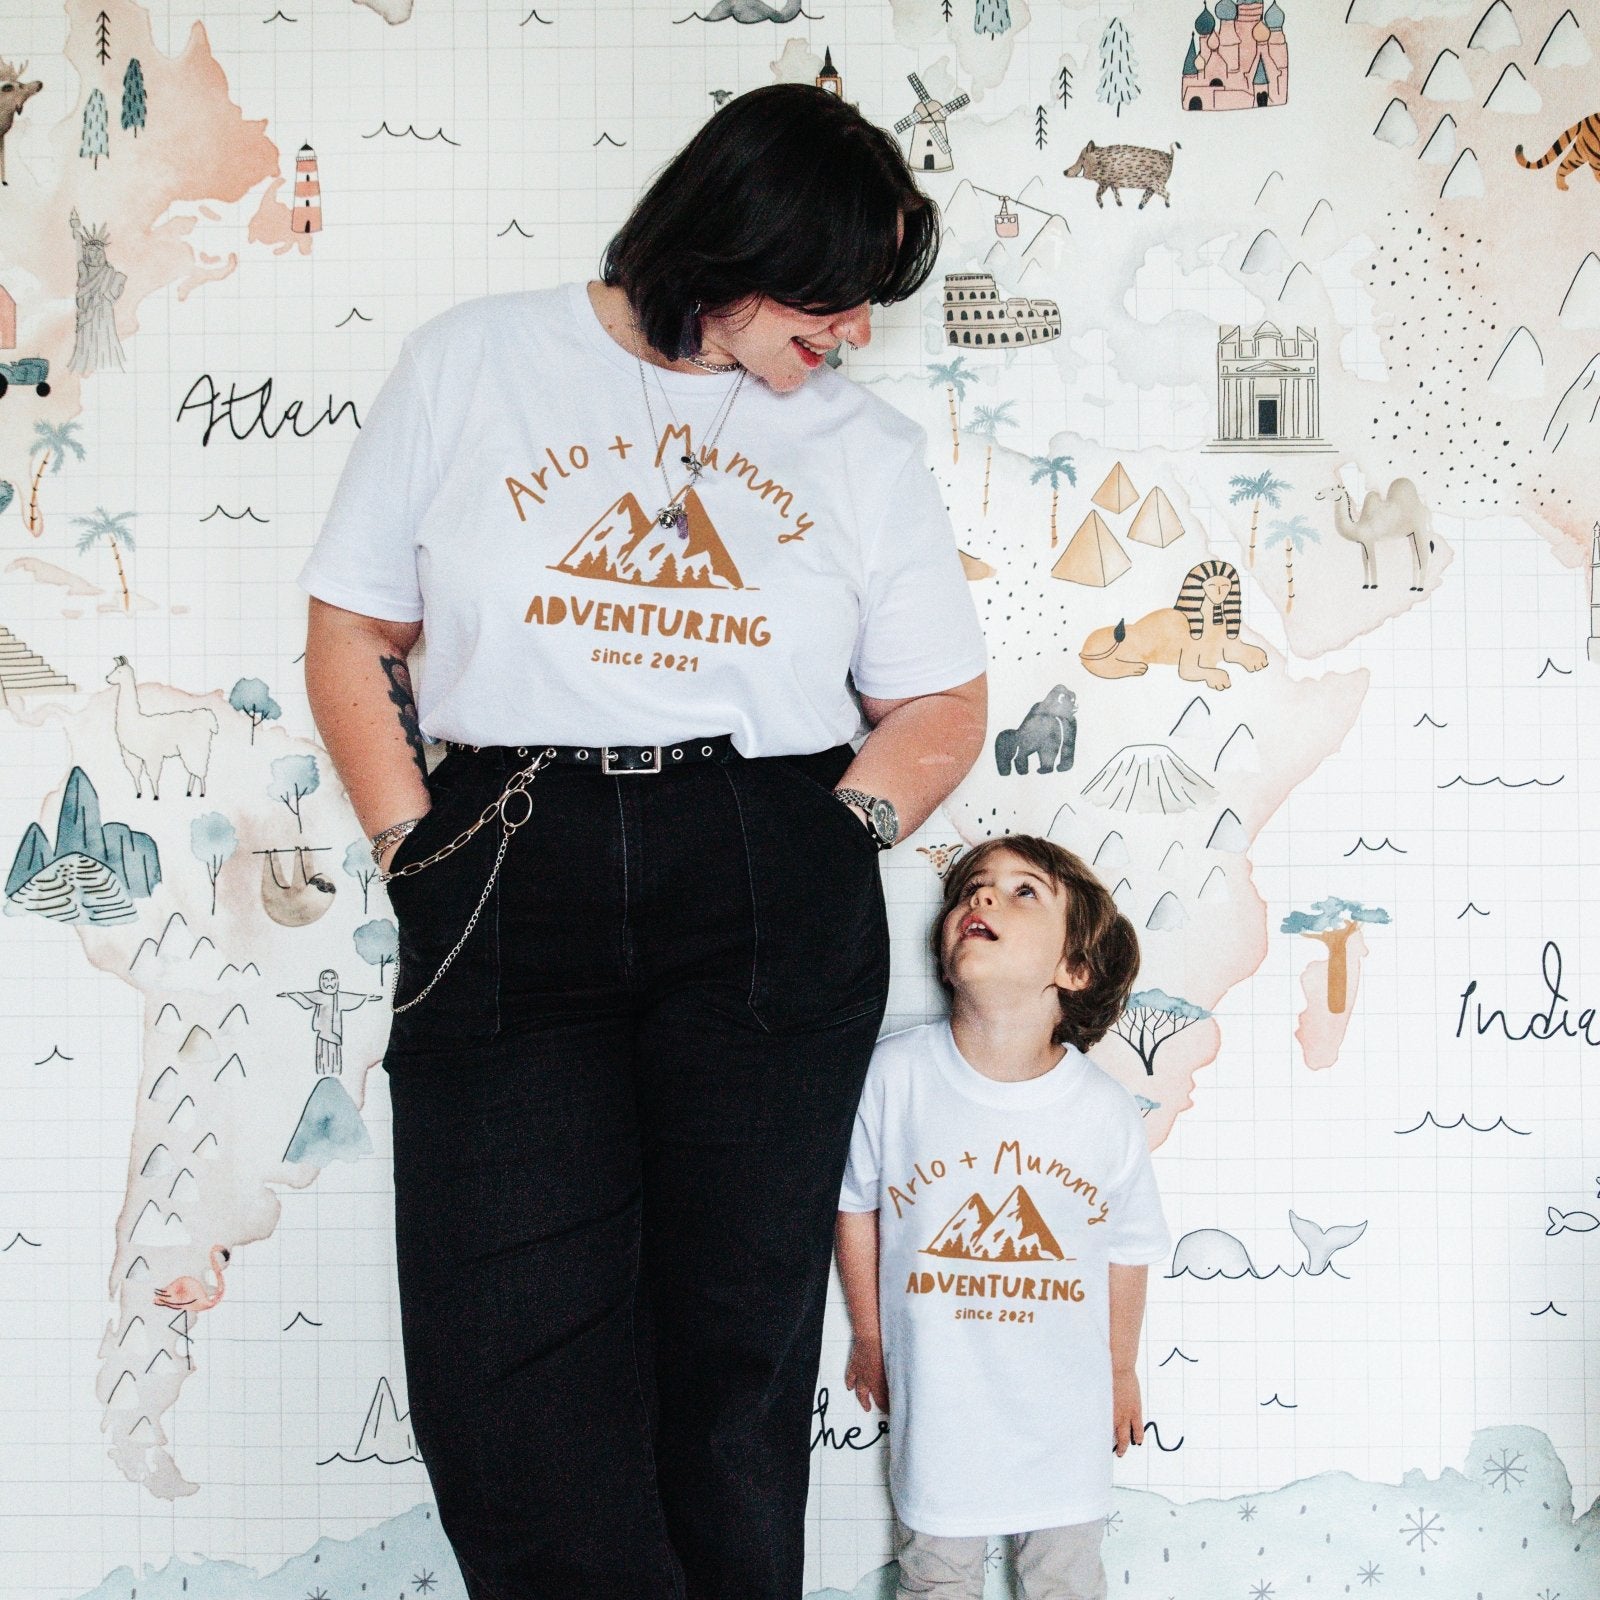 Adventuring Parent & Child T-Shirt Set - I am Nat Ltd - Adult & Child Matching Sets